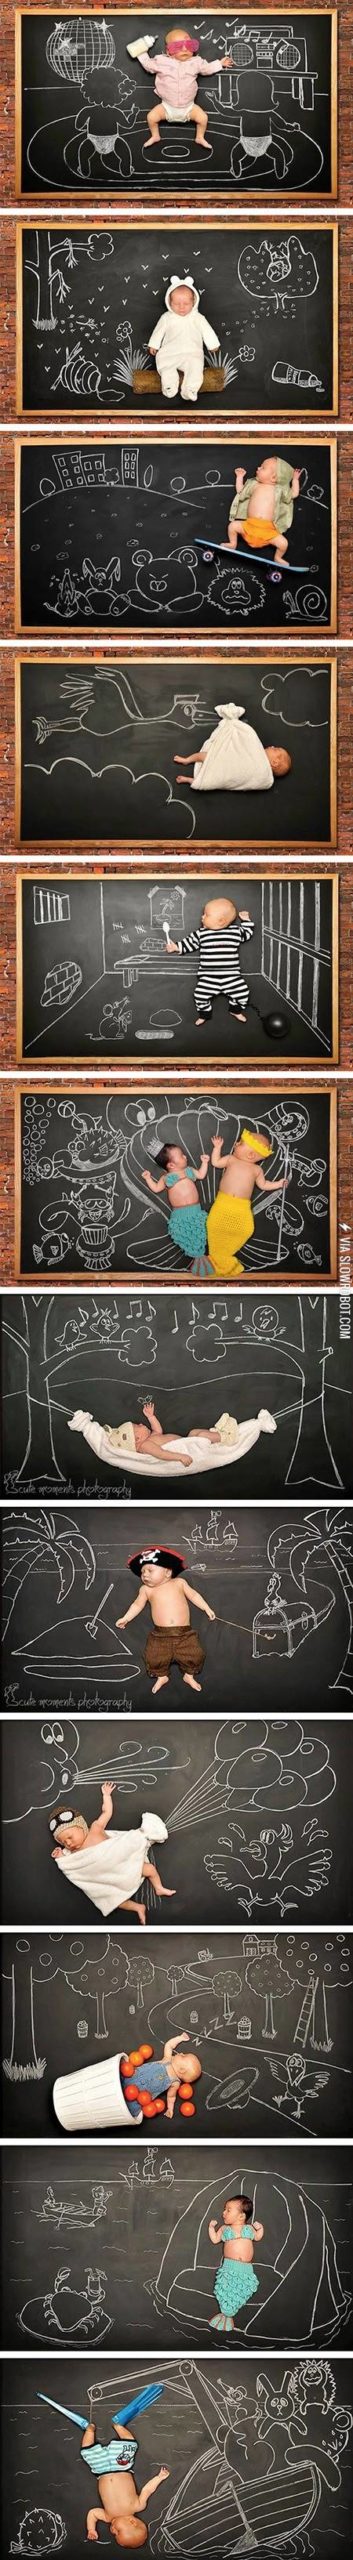 Chalkboard+baby+photos